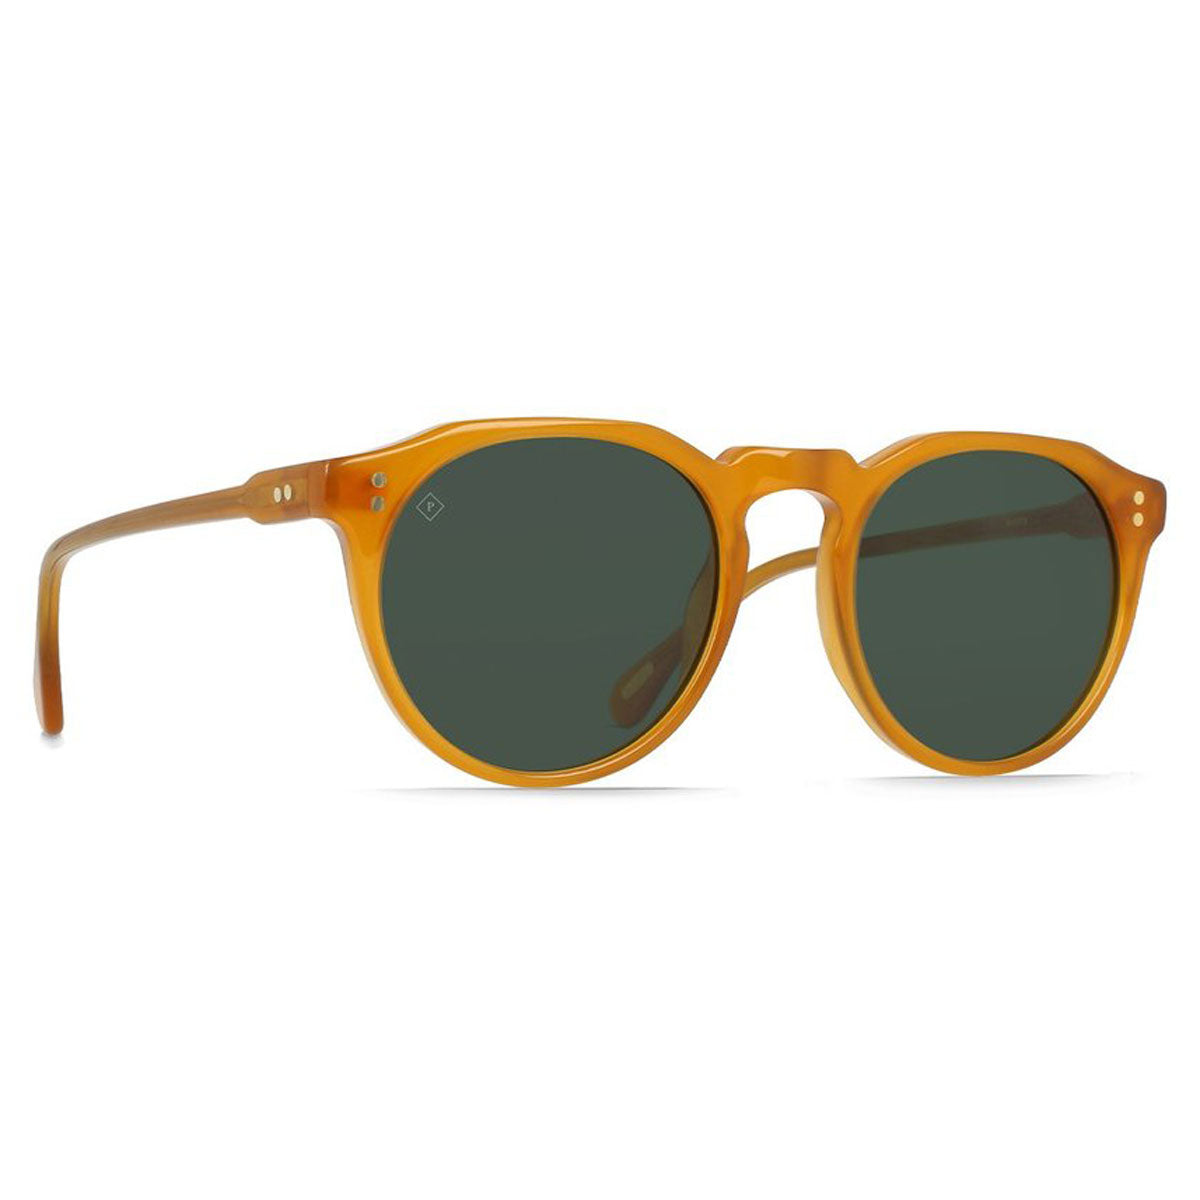 Raen Remmy 52 Sunglasses - Honey/Green Polarized image 1